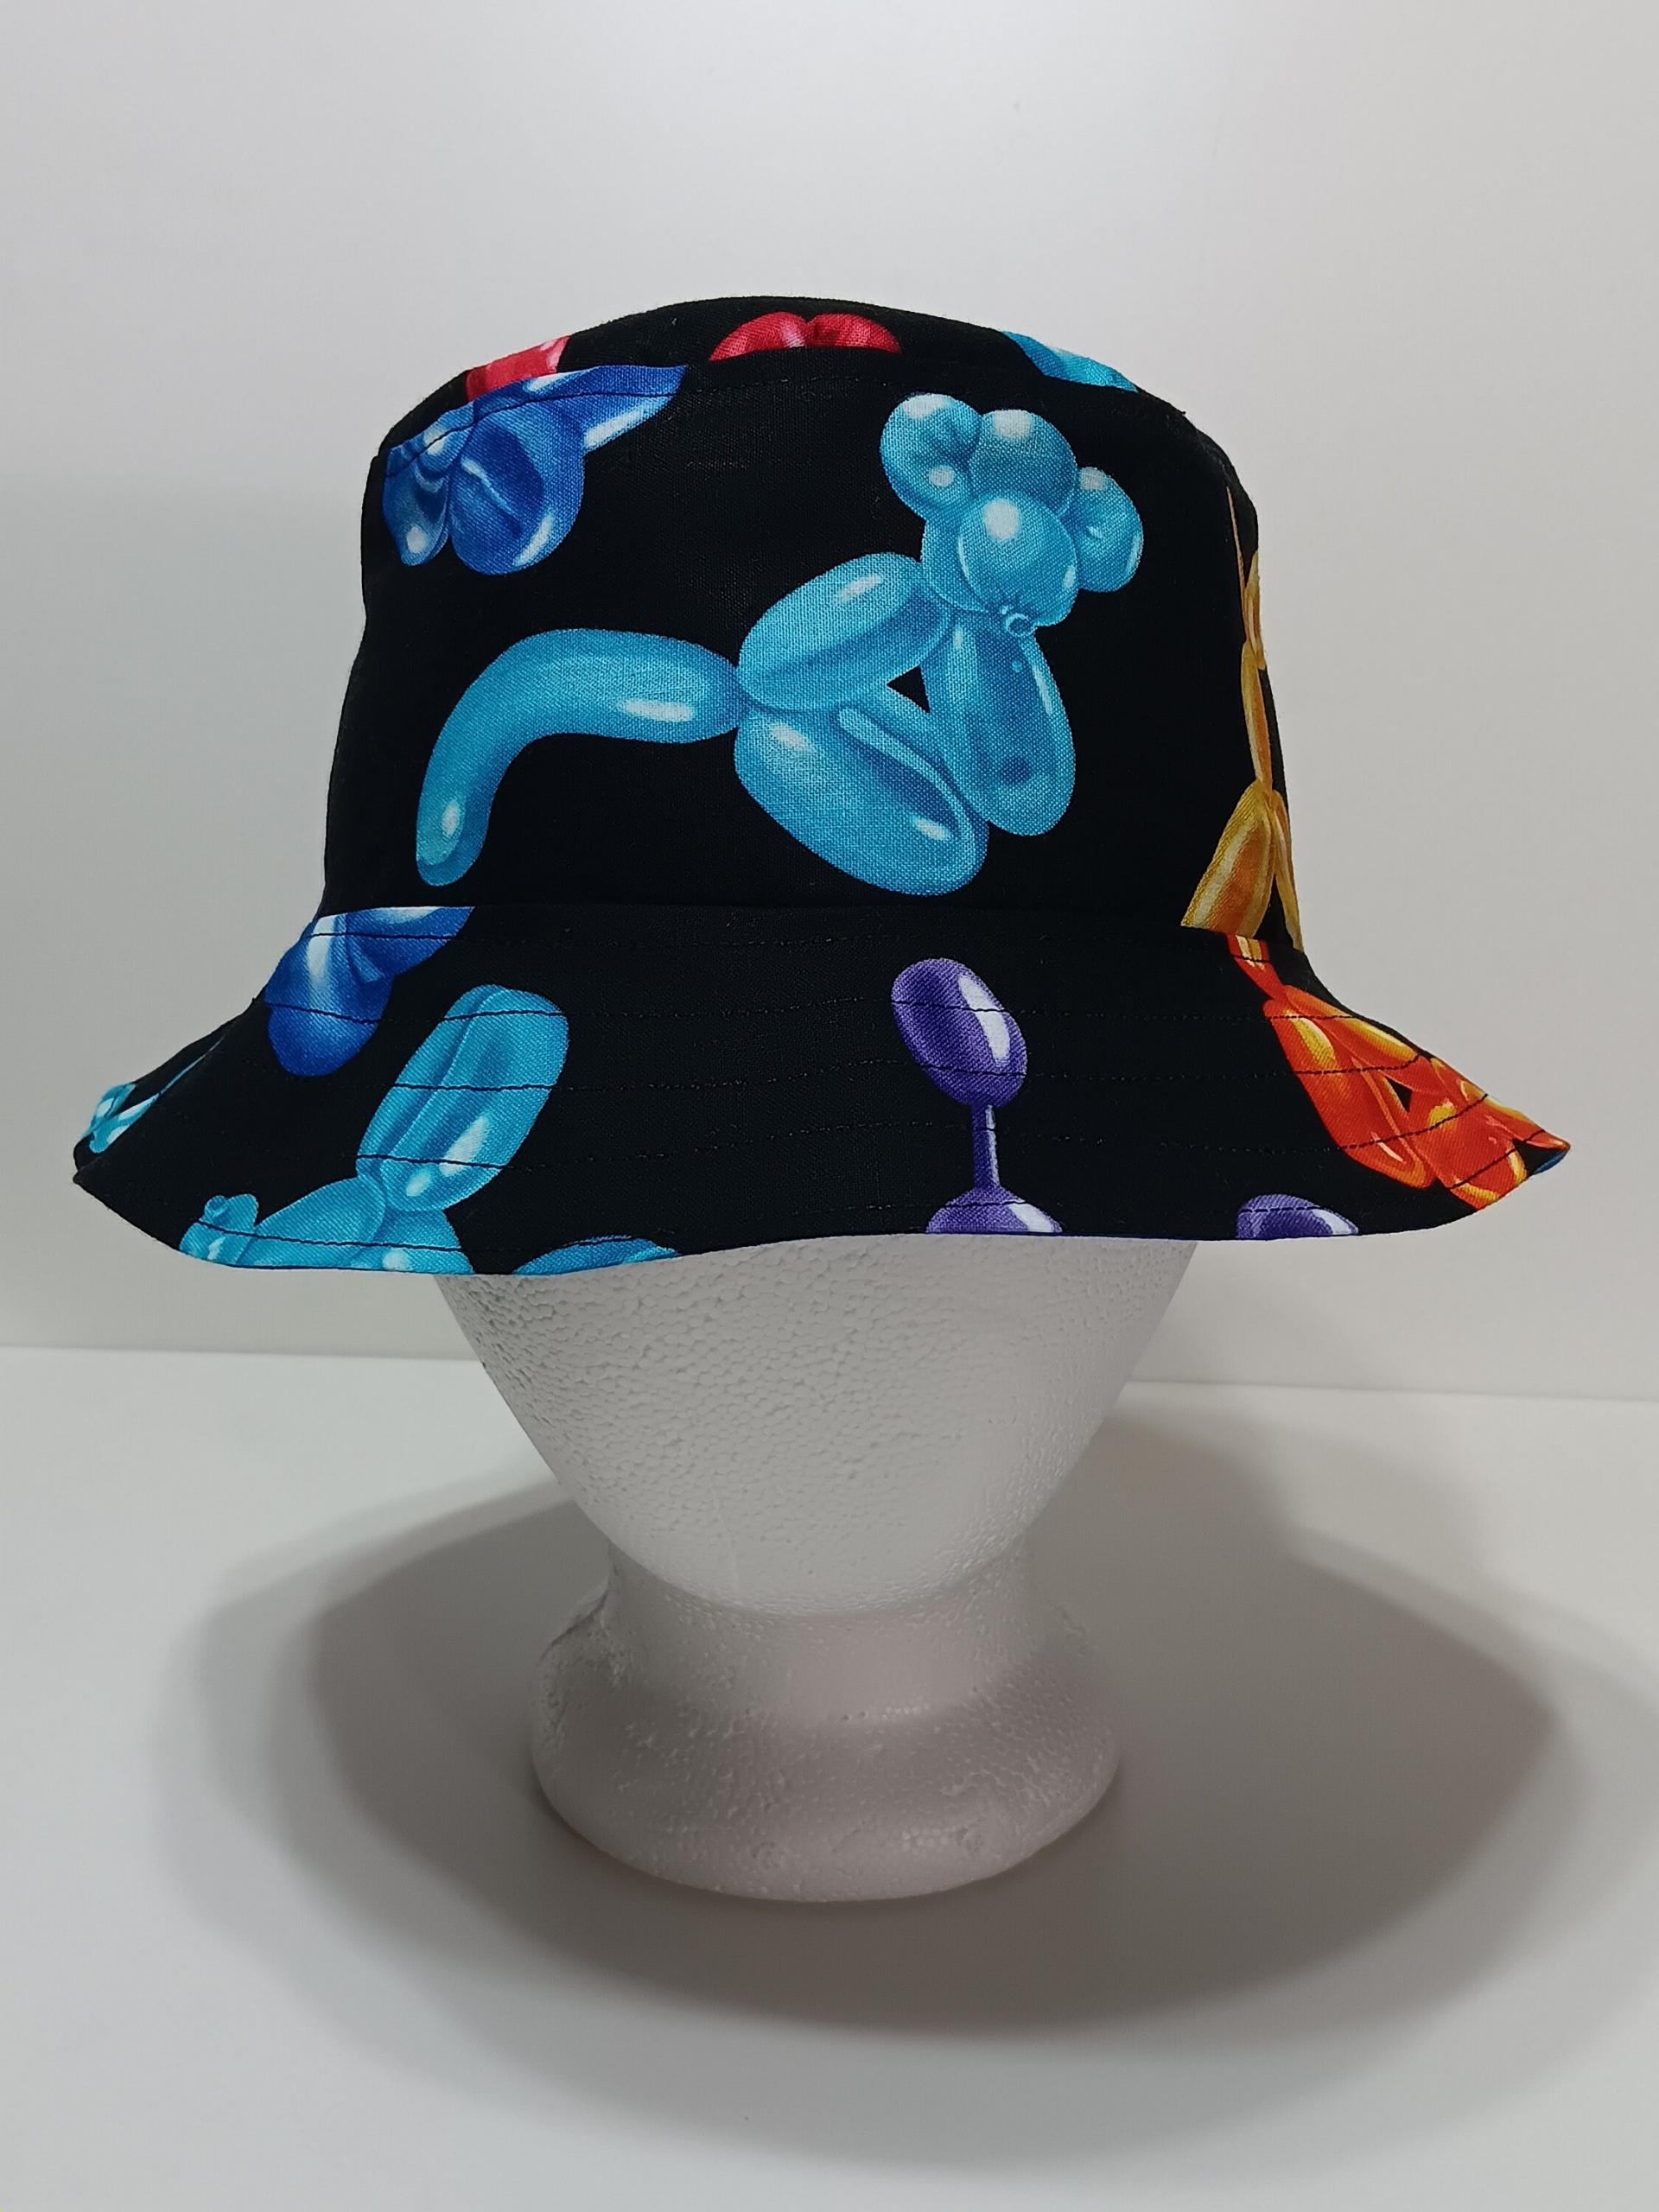 Balloon Animals Bucket Hat, Reversible, Sizes S-XXL, cotton, clowning hat, fishing hat, sun hat, floppy hat, festival hat, party hat